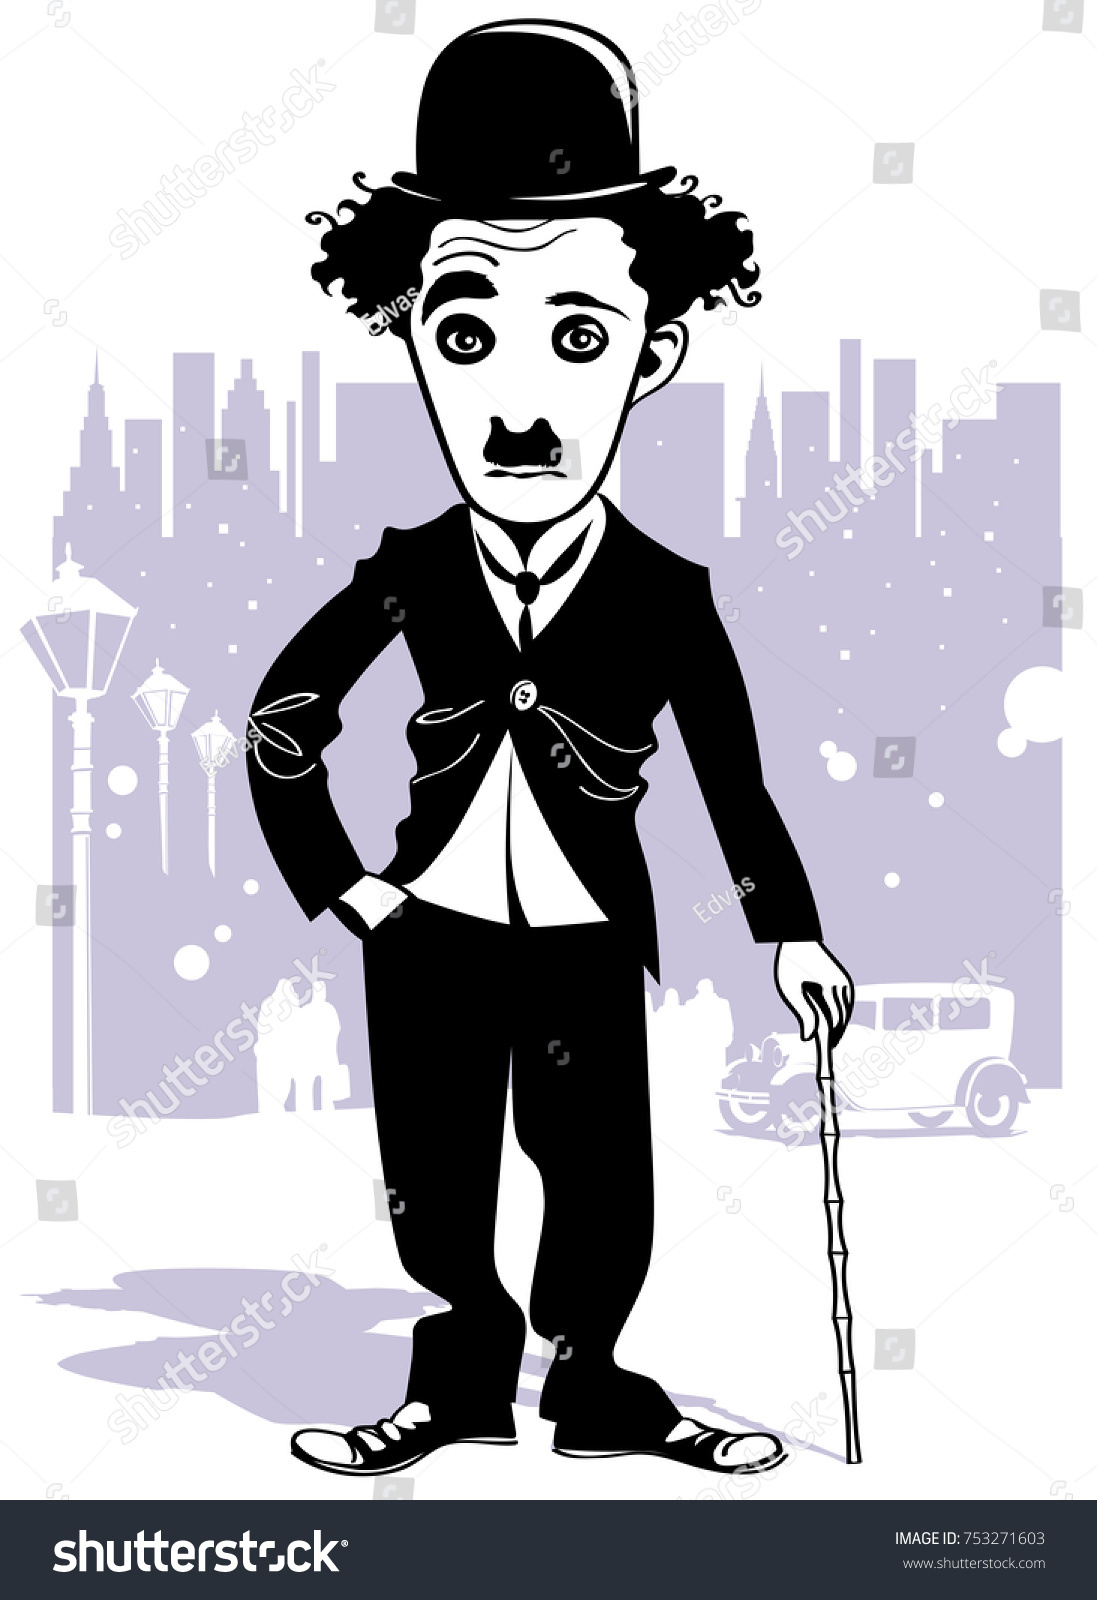 Charlie Chaplin cartoon